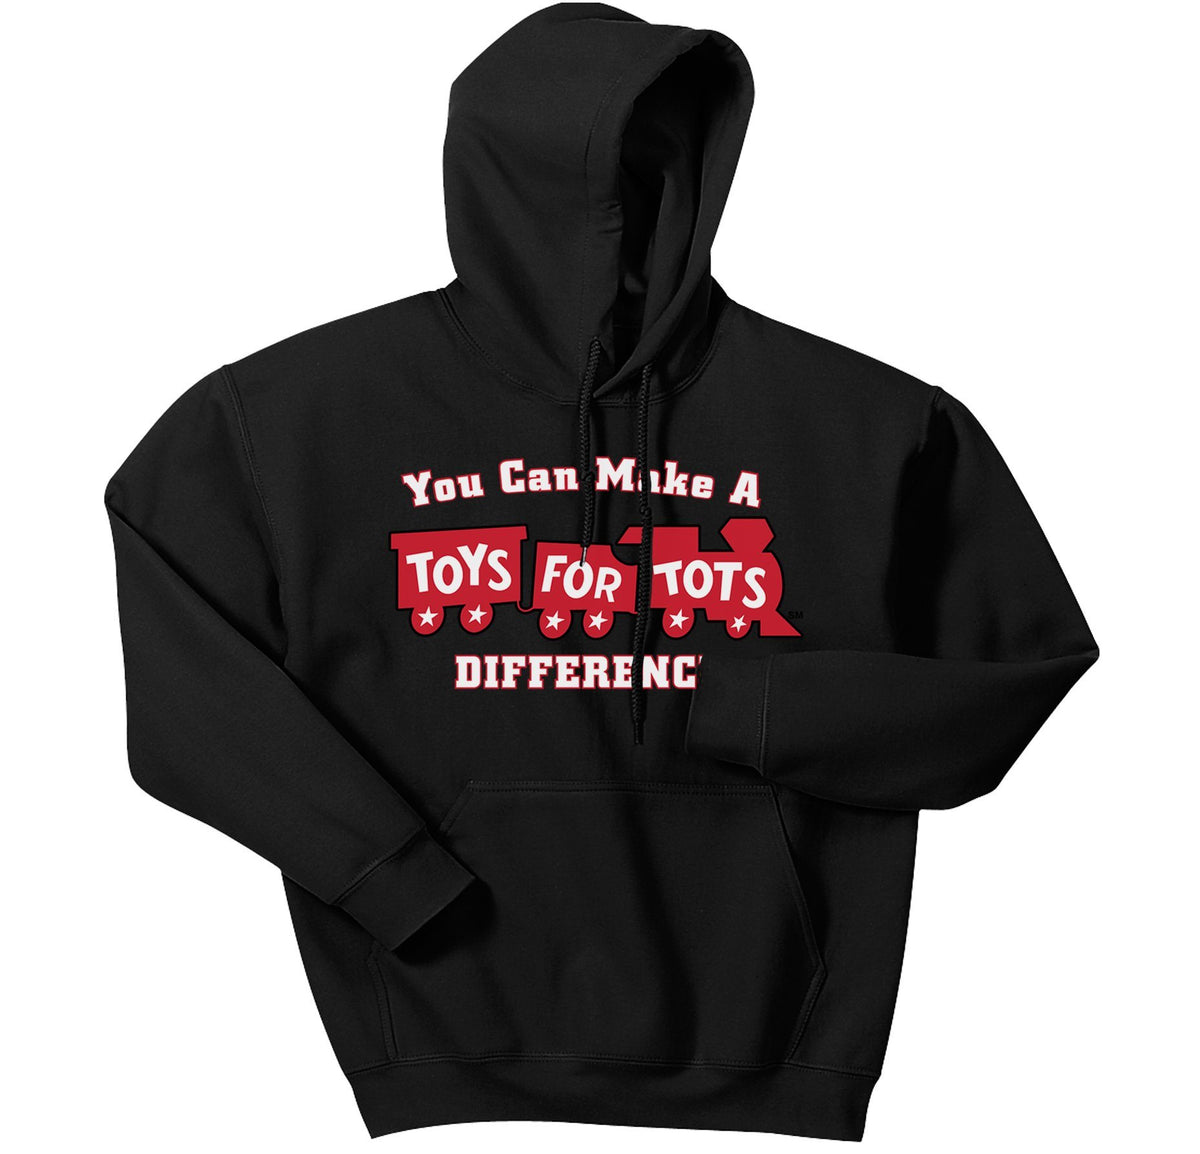 Make a Difference TFT Train Kids Hoodie TFT Sweatshirt/hoodie marinecorpsdirecttft S BLACK 